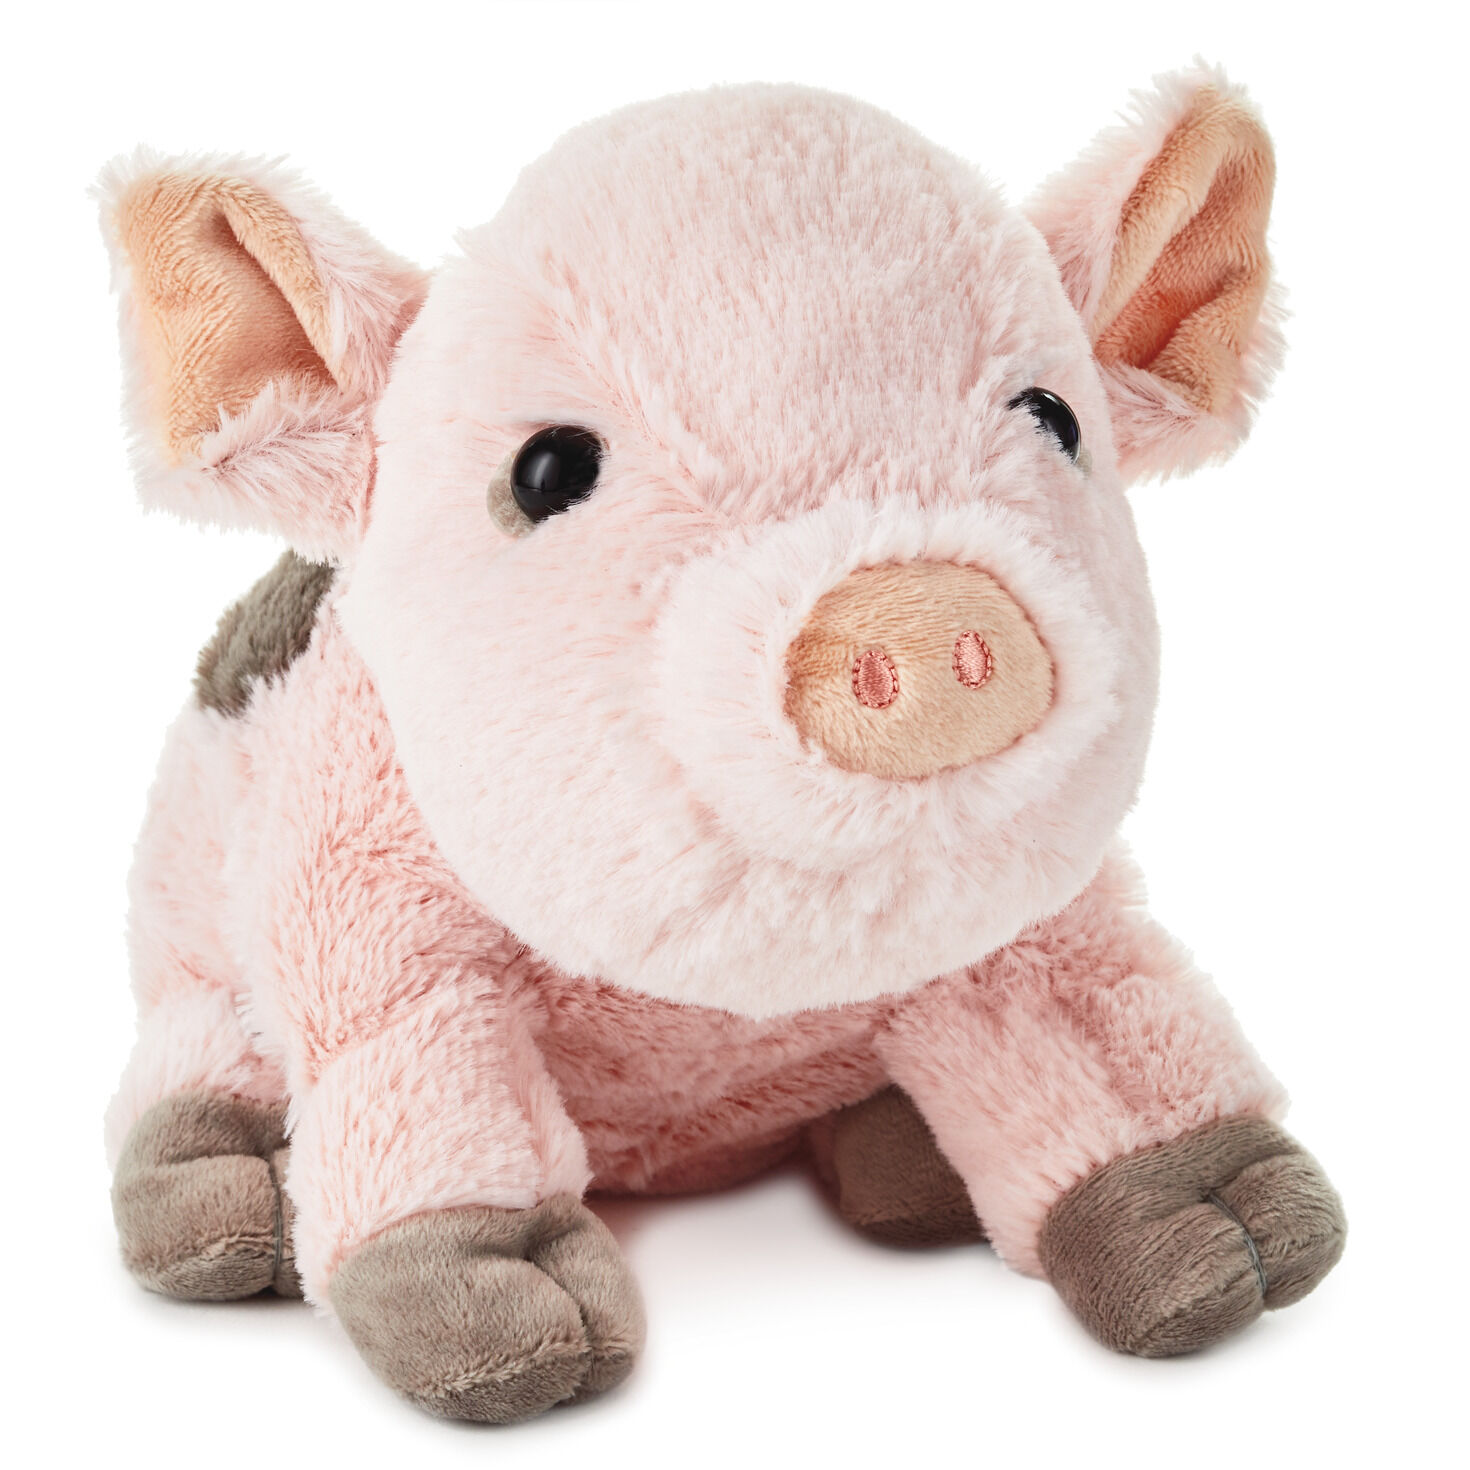 baby pig stuffed animal